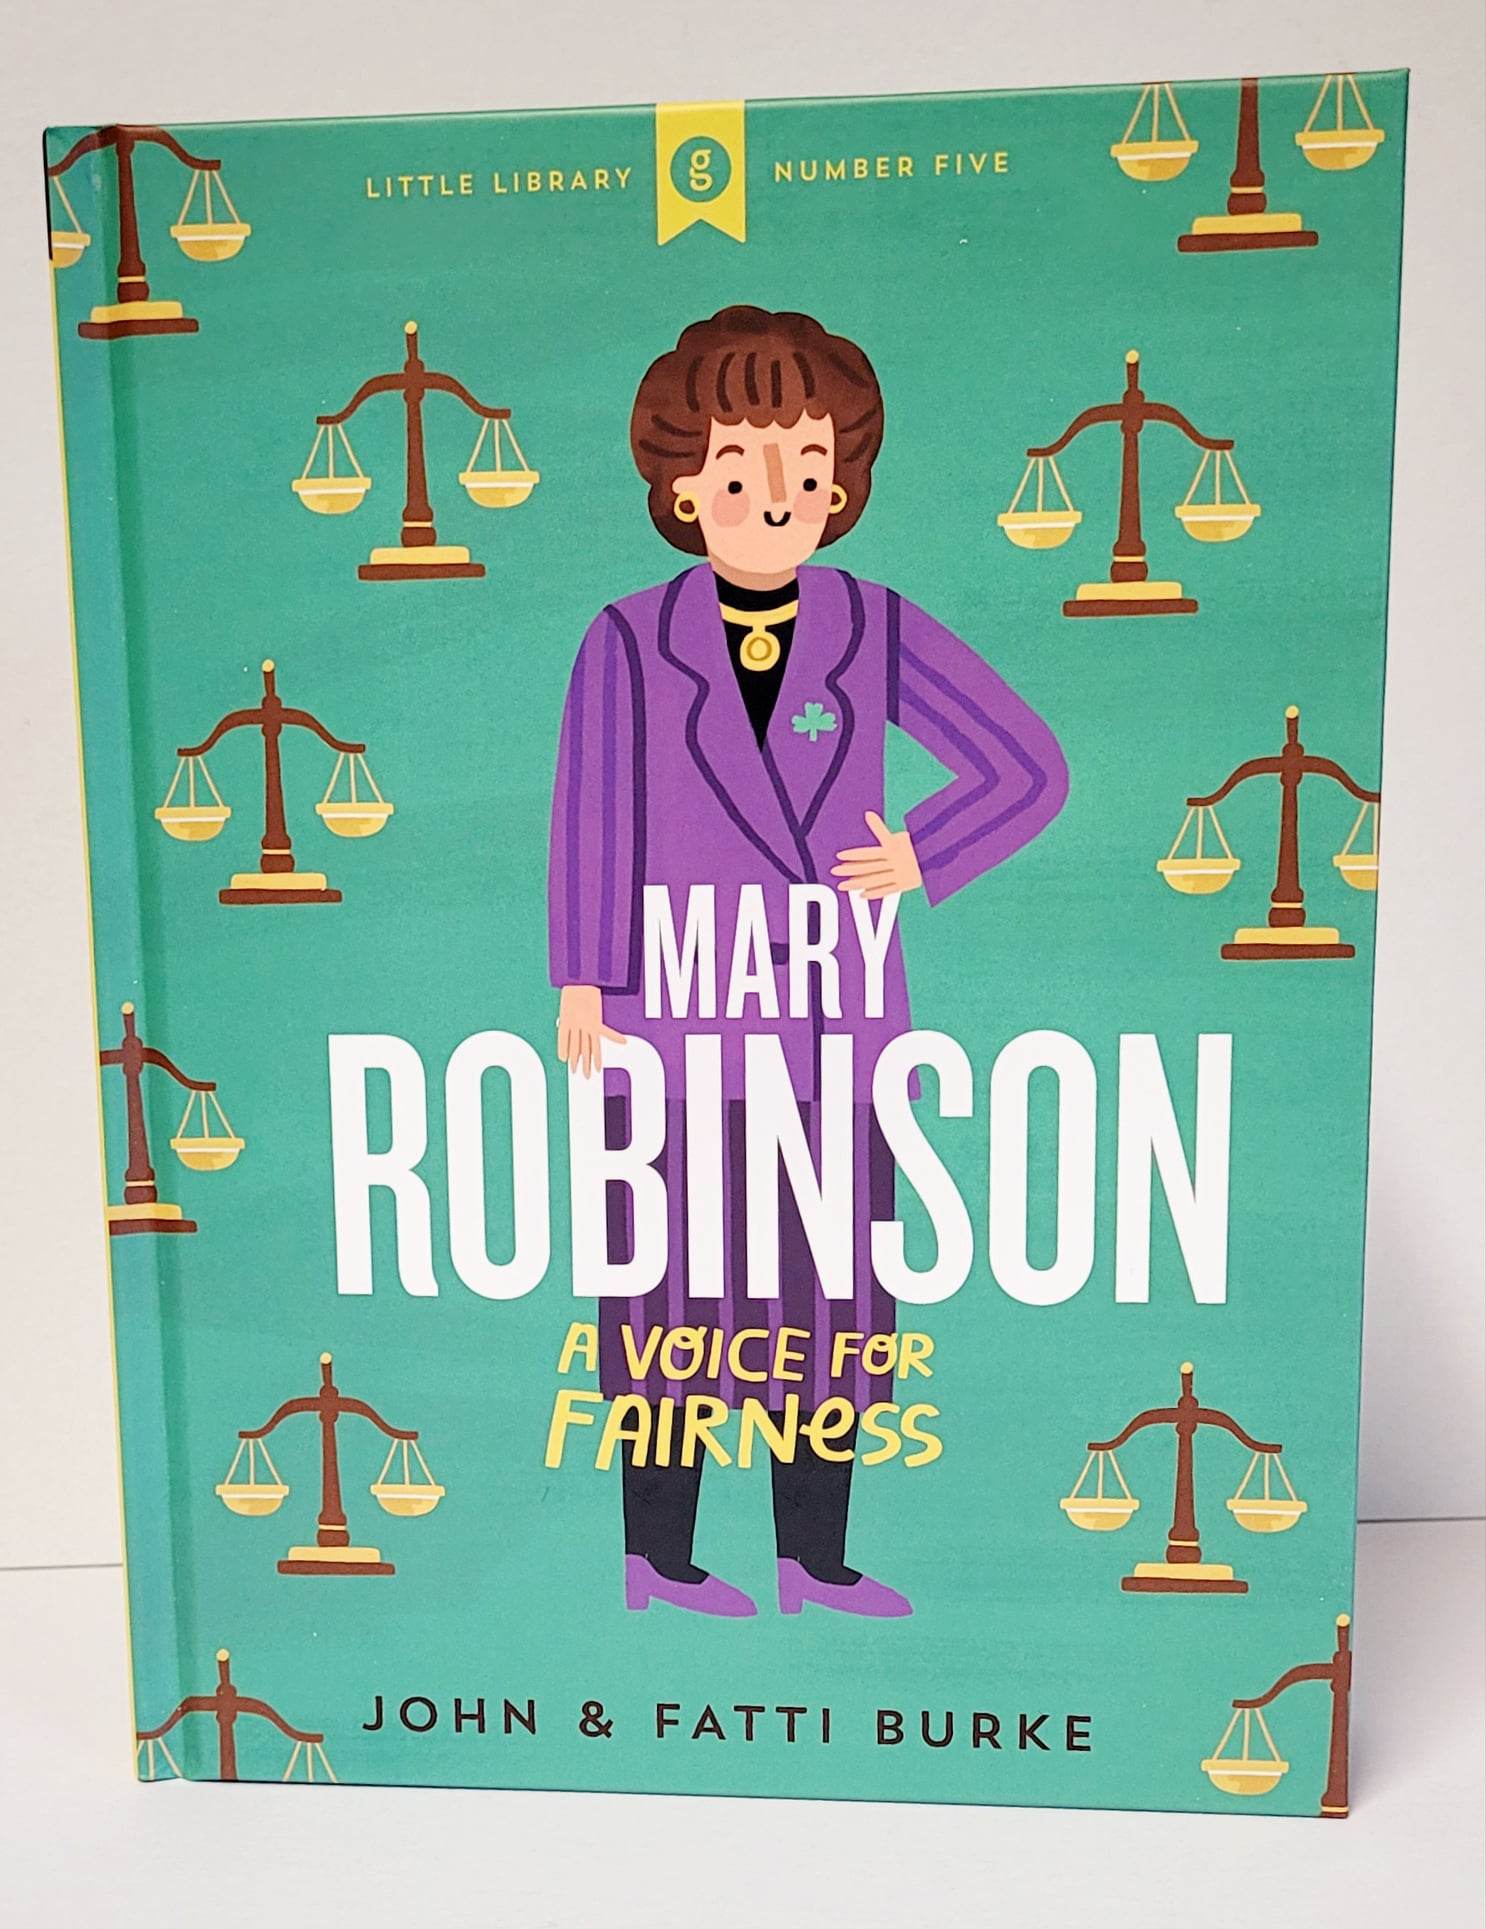 Mary Robinson A Voice for Fairness by John & Fatti Burke